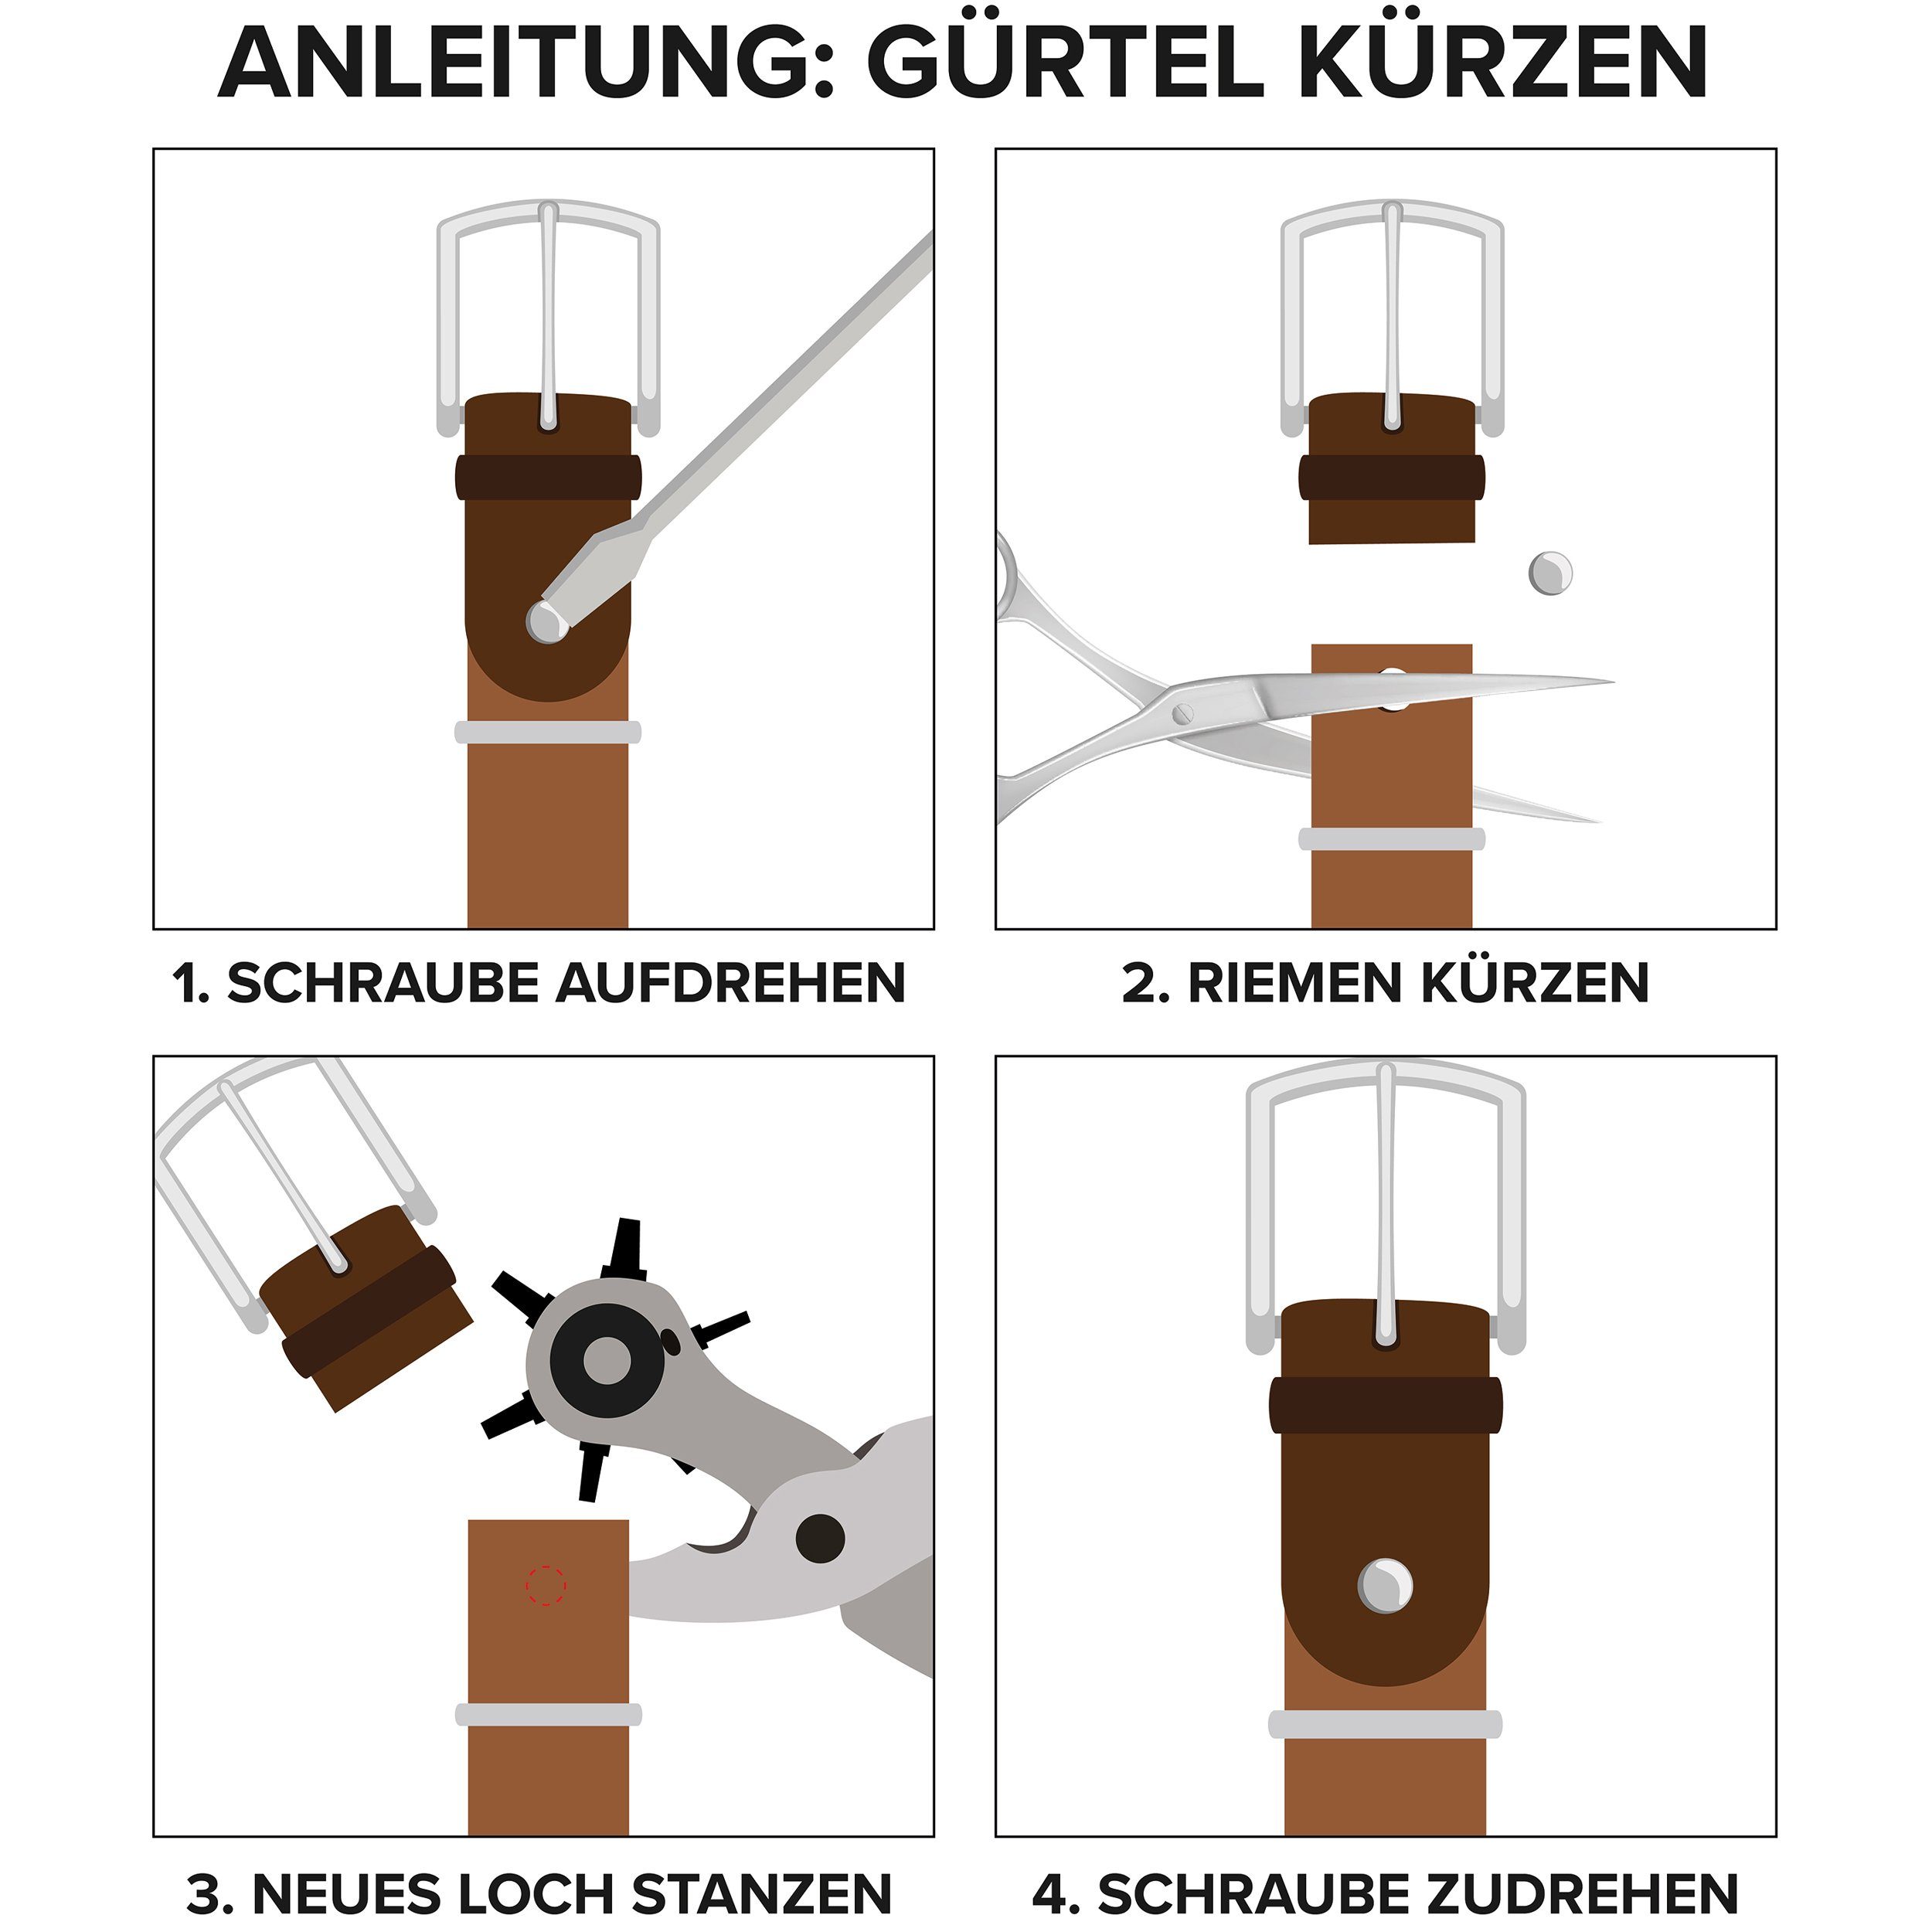 IN COLOGNEBELT C2-GE mit Dornschließe, Rustikal MADE Schlicht GERMANY modern Ledergürtel dennoch